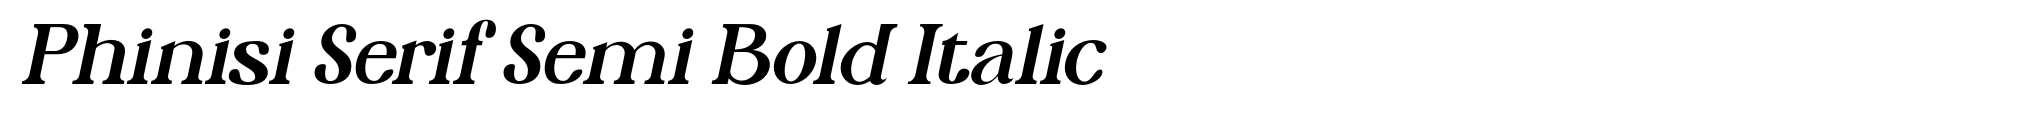 Phinisi Serif Semi Bold Italic image